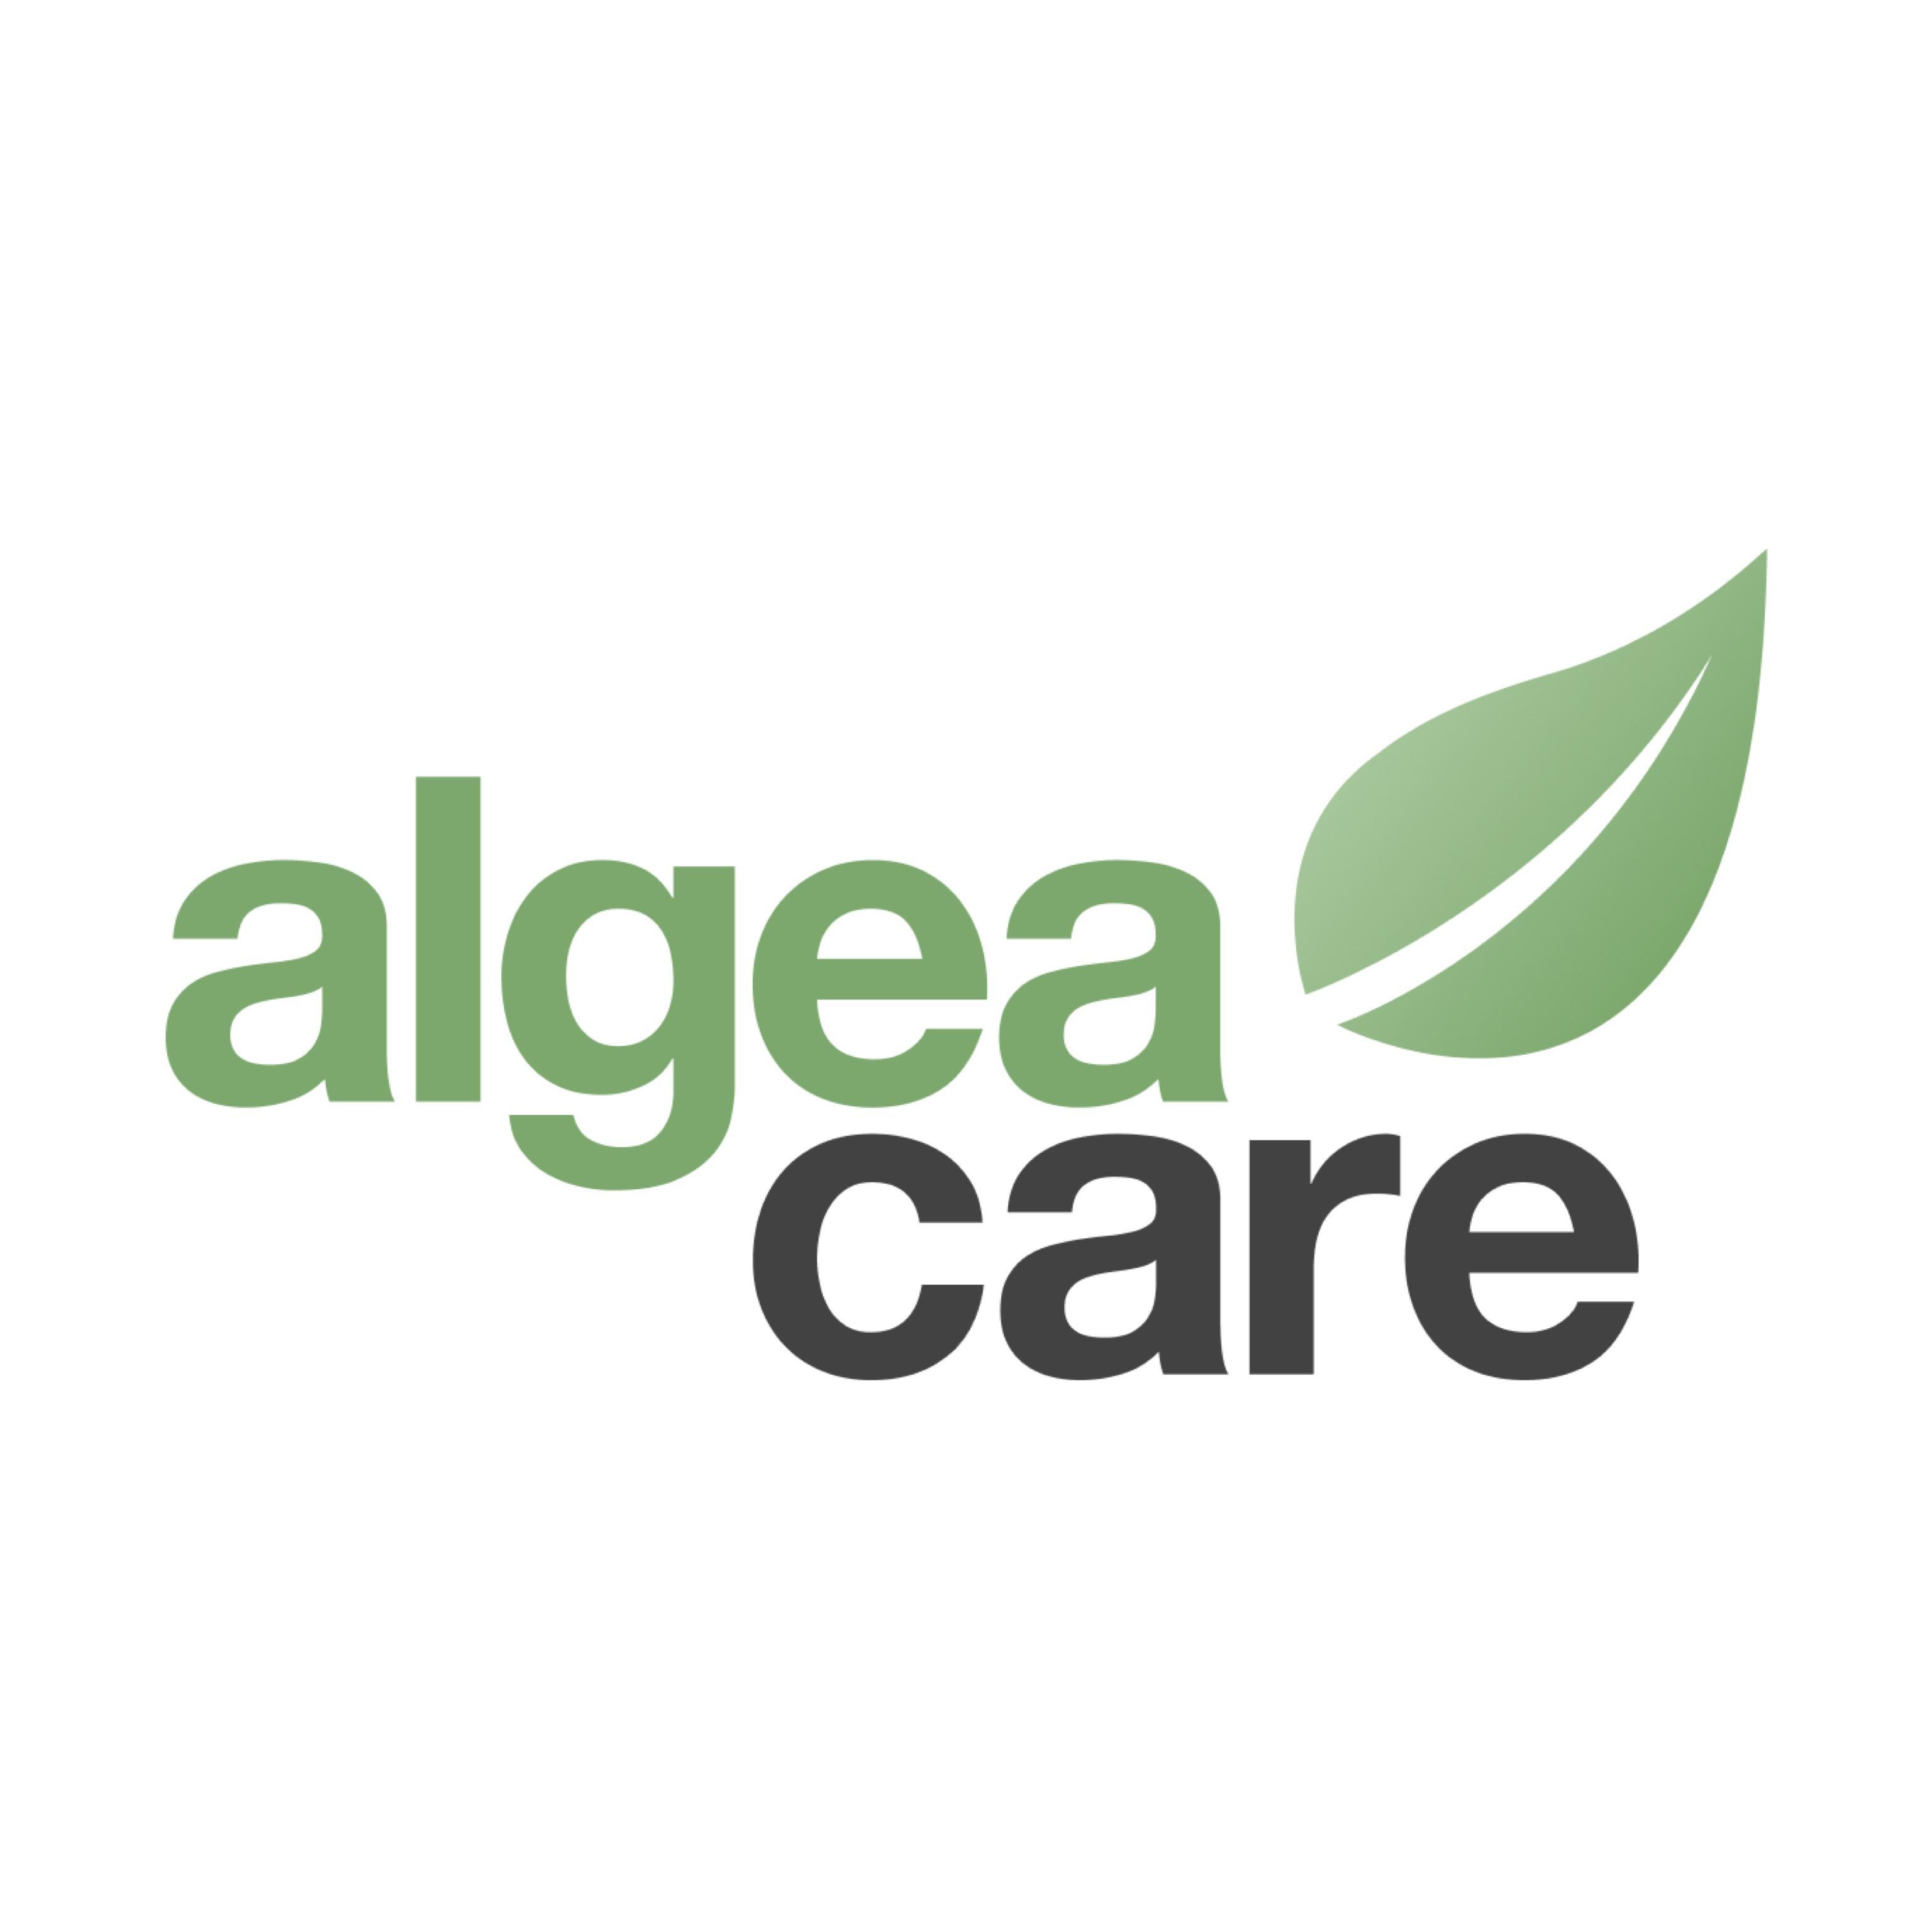 Algea Care Therapiezentrum Nürnberg in Nürnberg - Logo